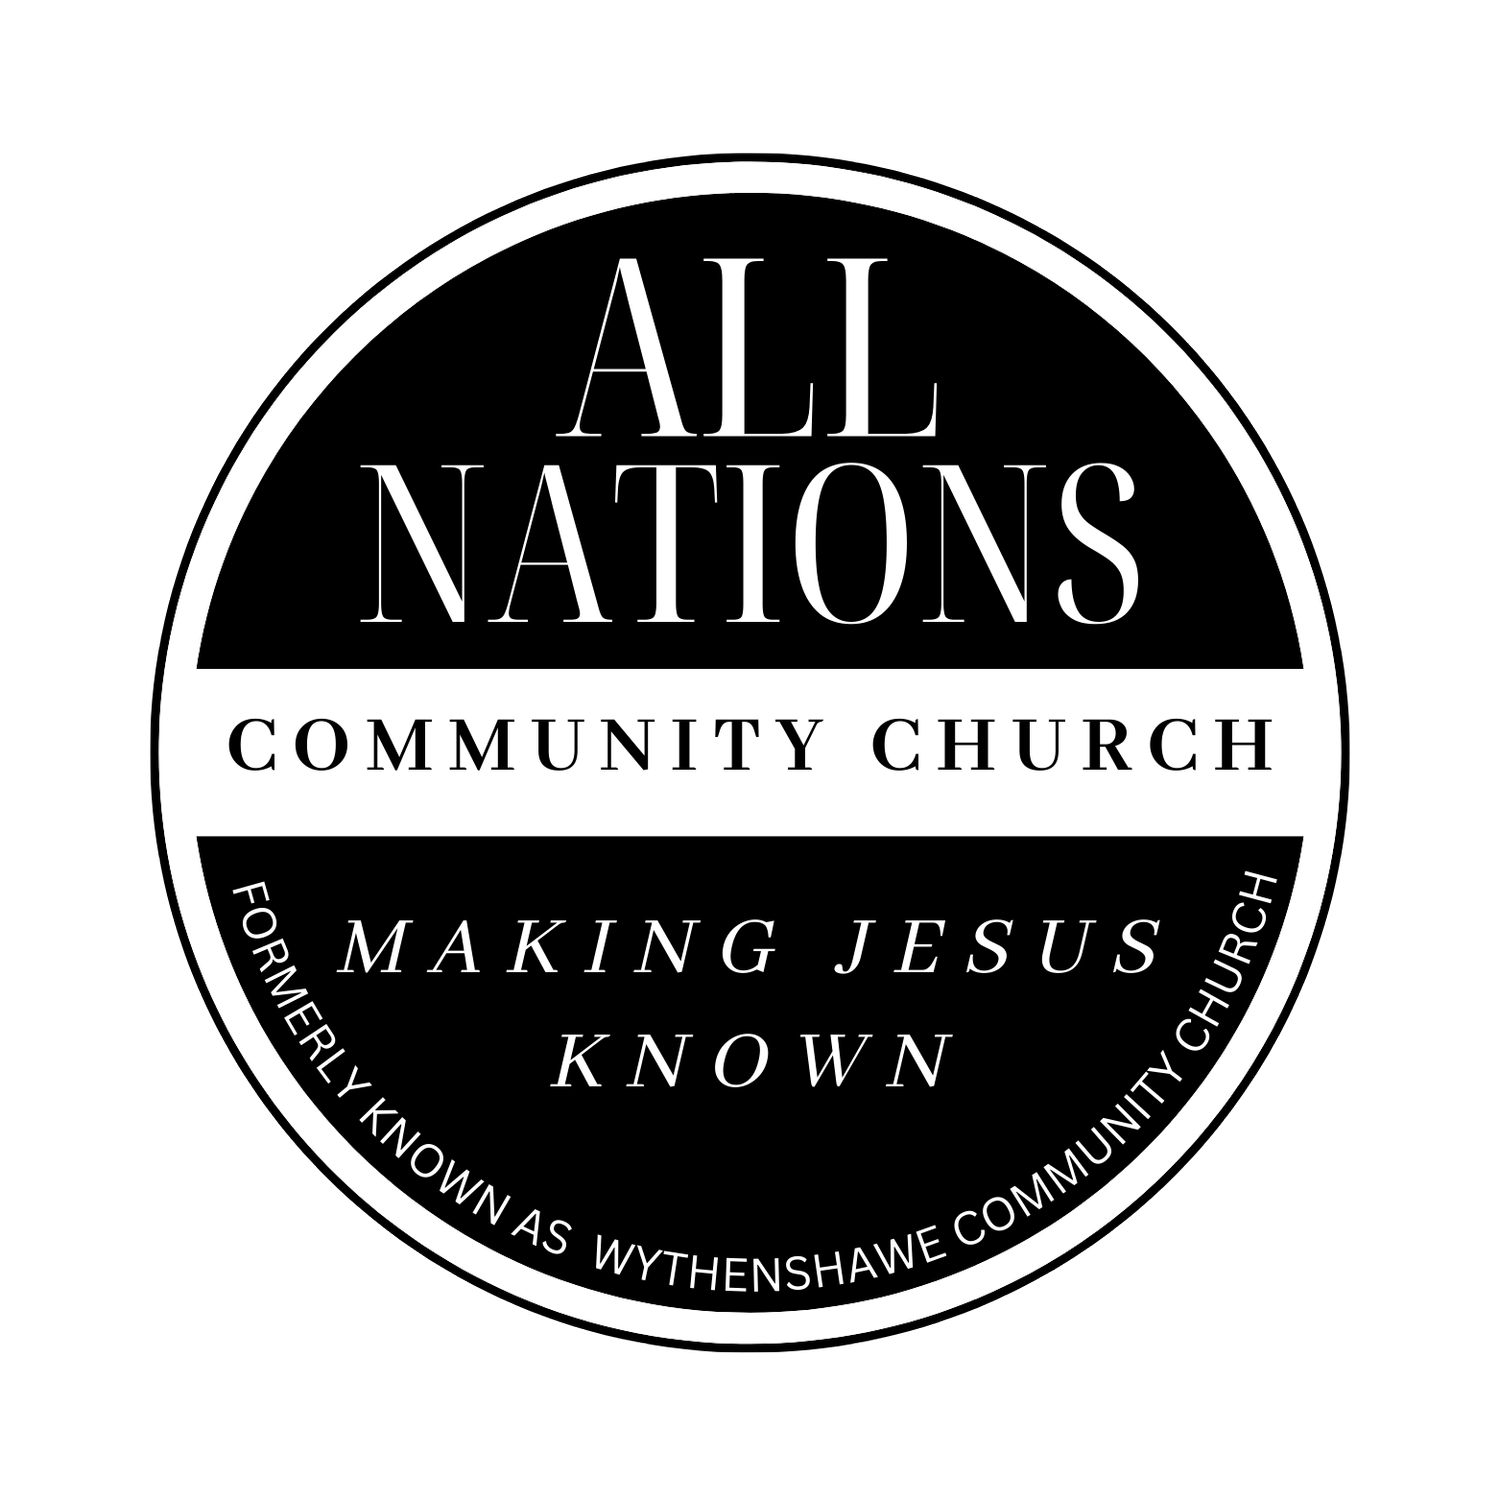 All Nations Community Church Wythenshawe - Community Through Faith and Fellowship (Pentecostal Church AOG)